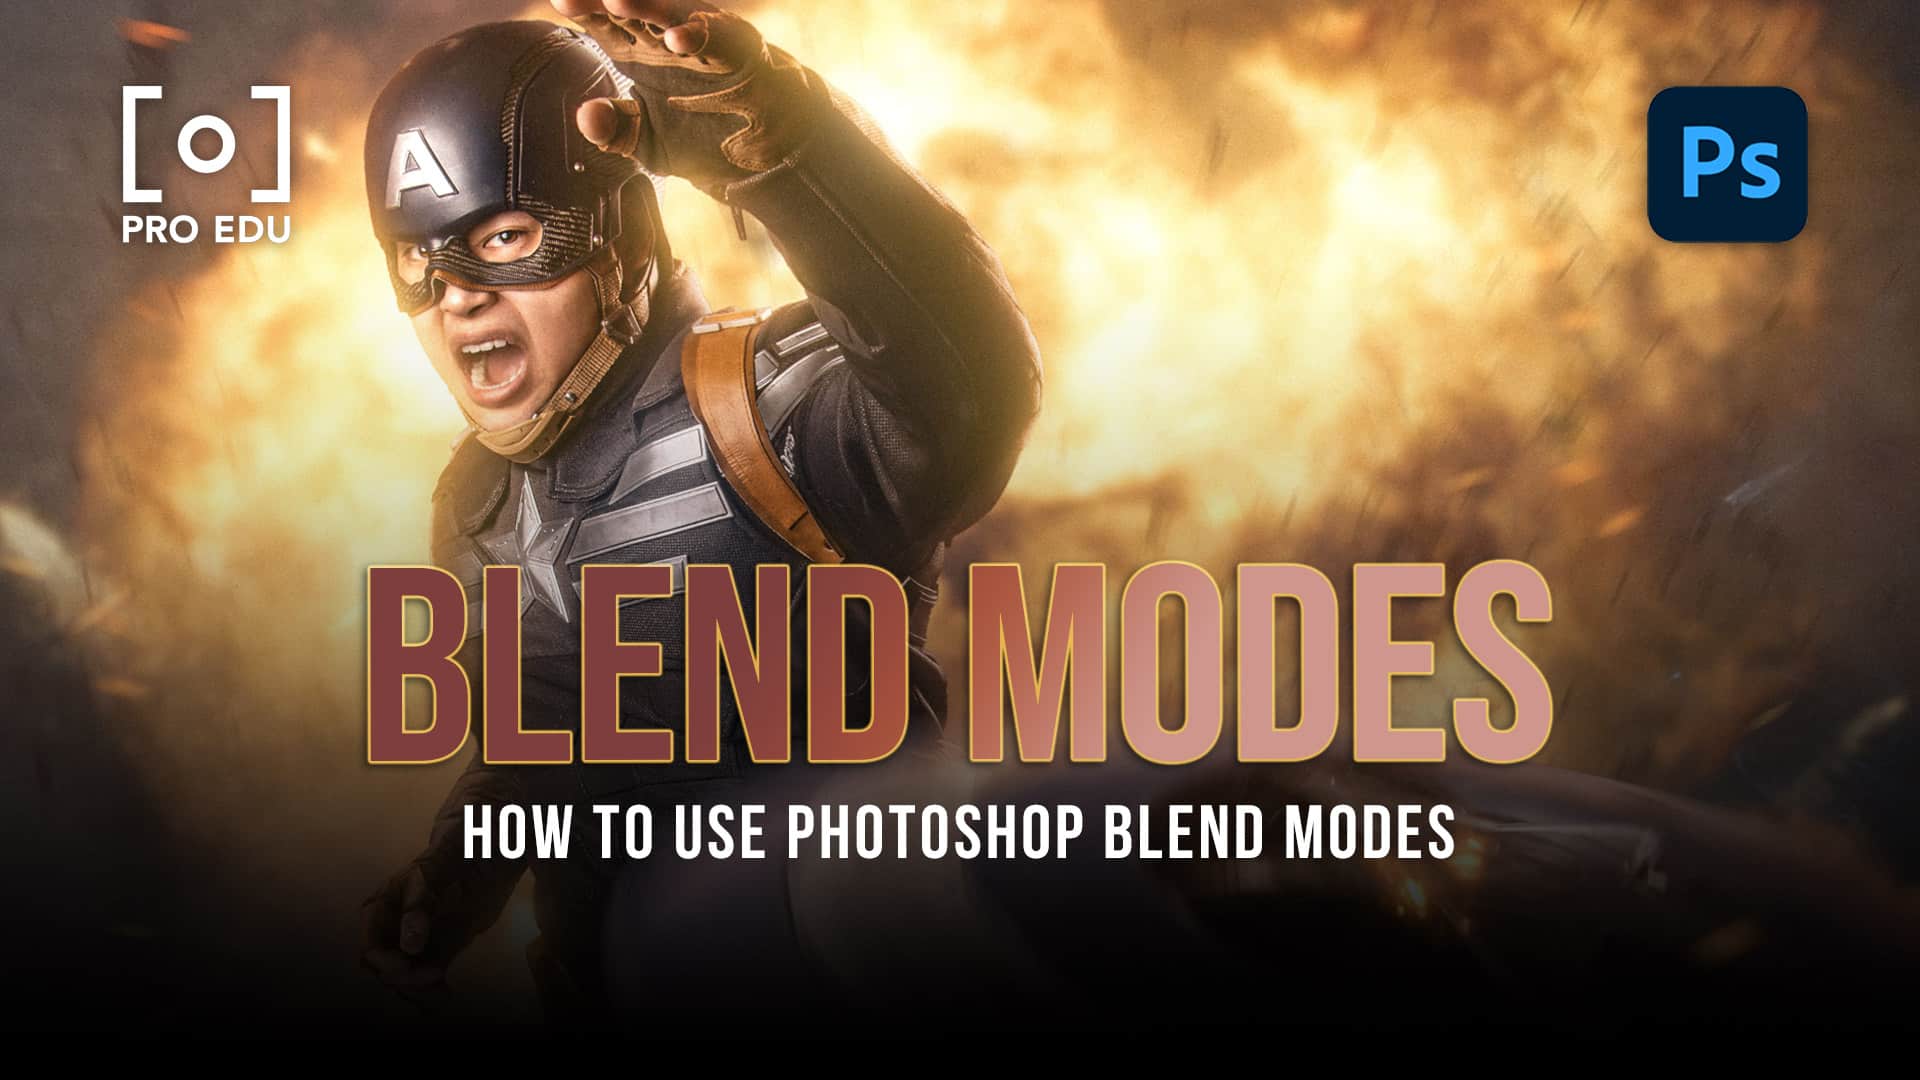 Artistic digital edit using Photoshop blending modes